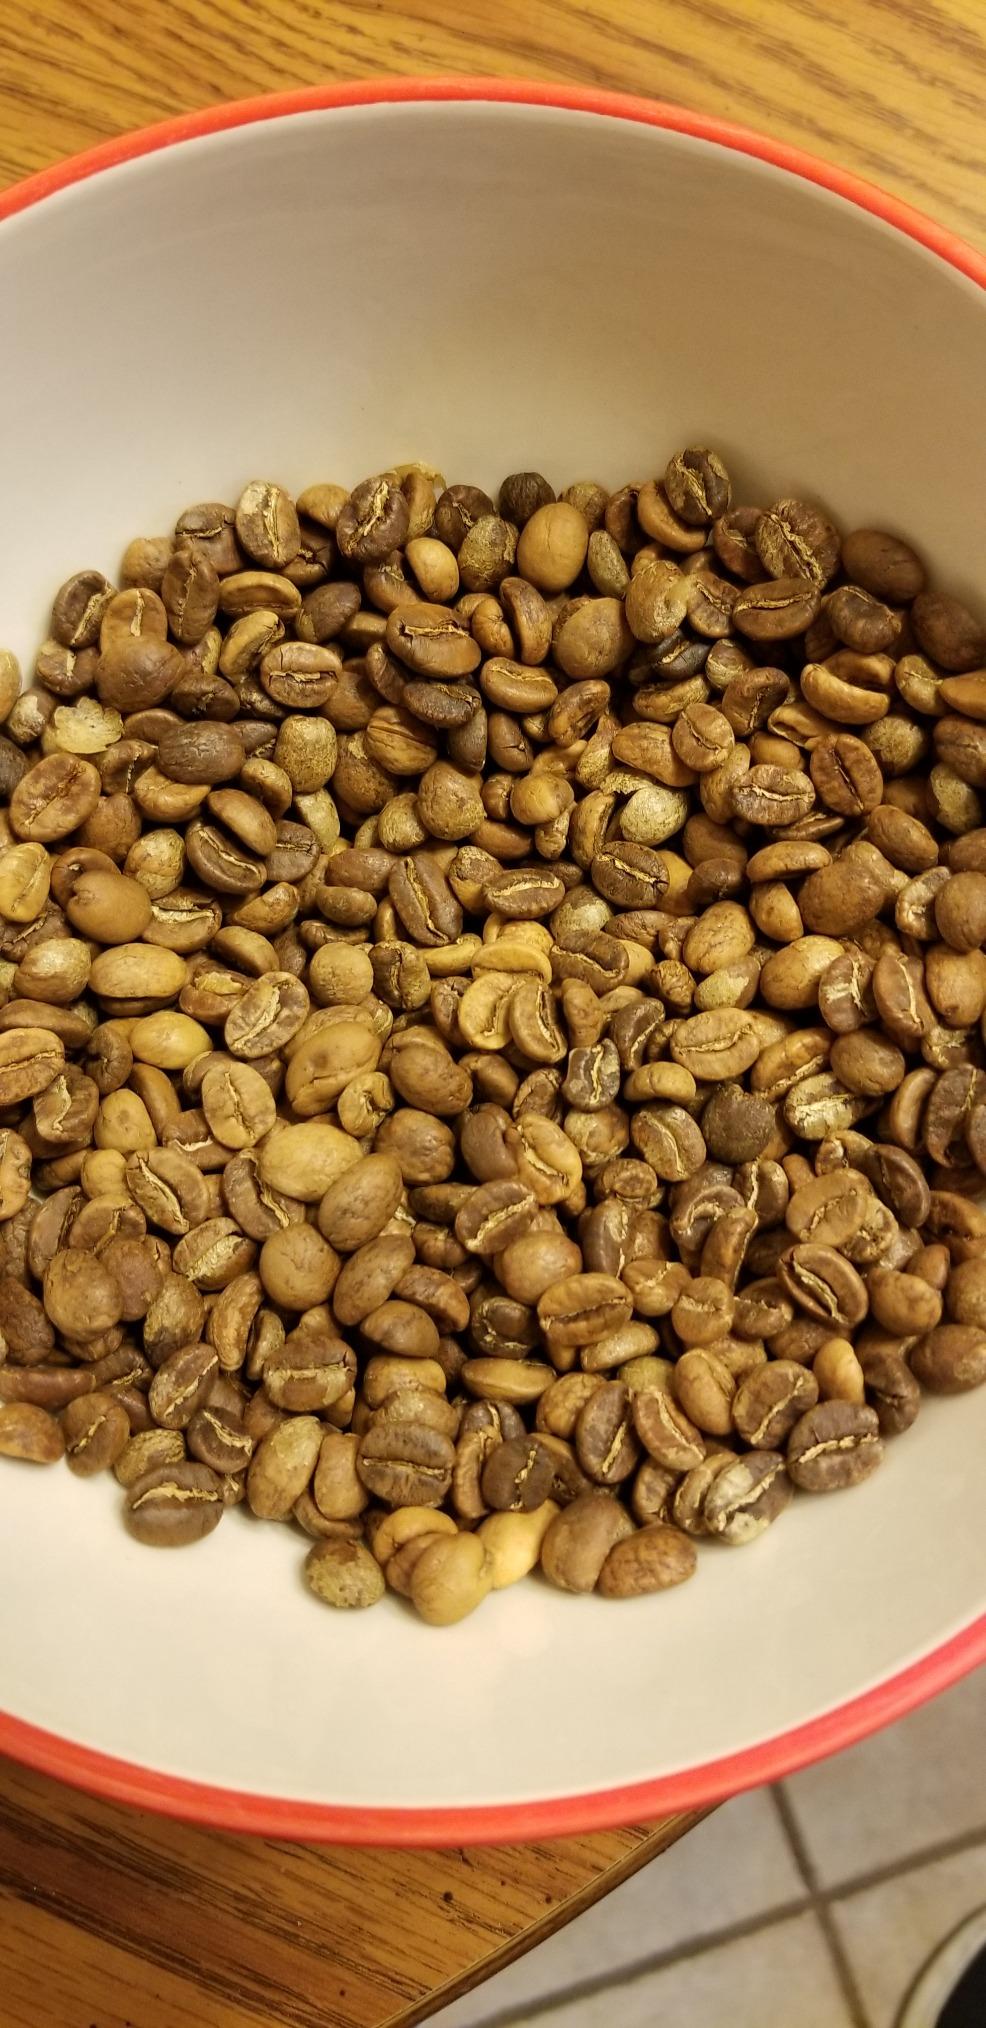 Home Coffee Bean Roaster Machine photo review